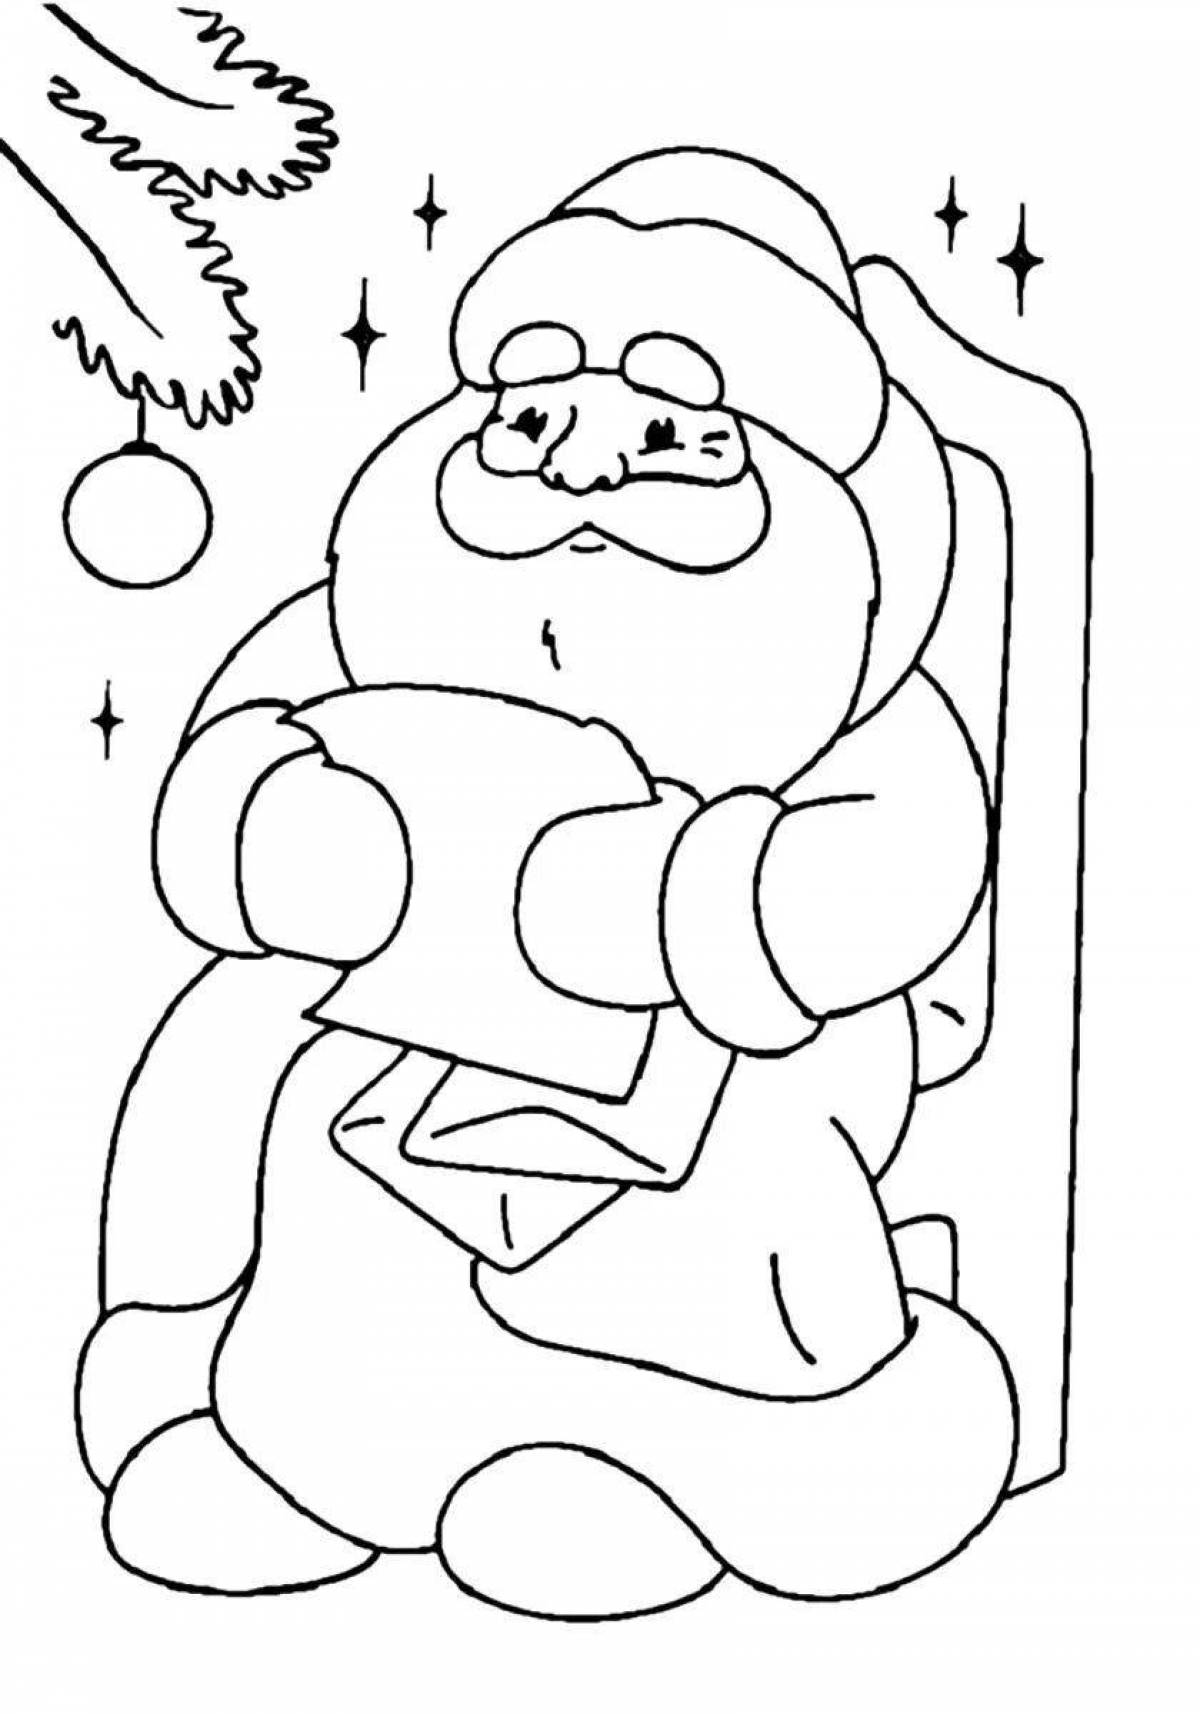 Fancy santa claus coloring page